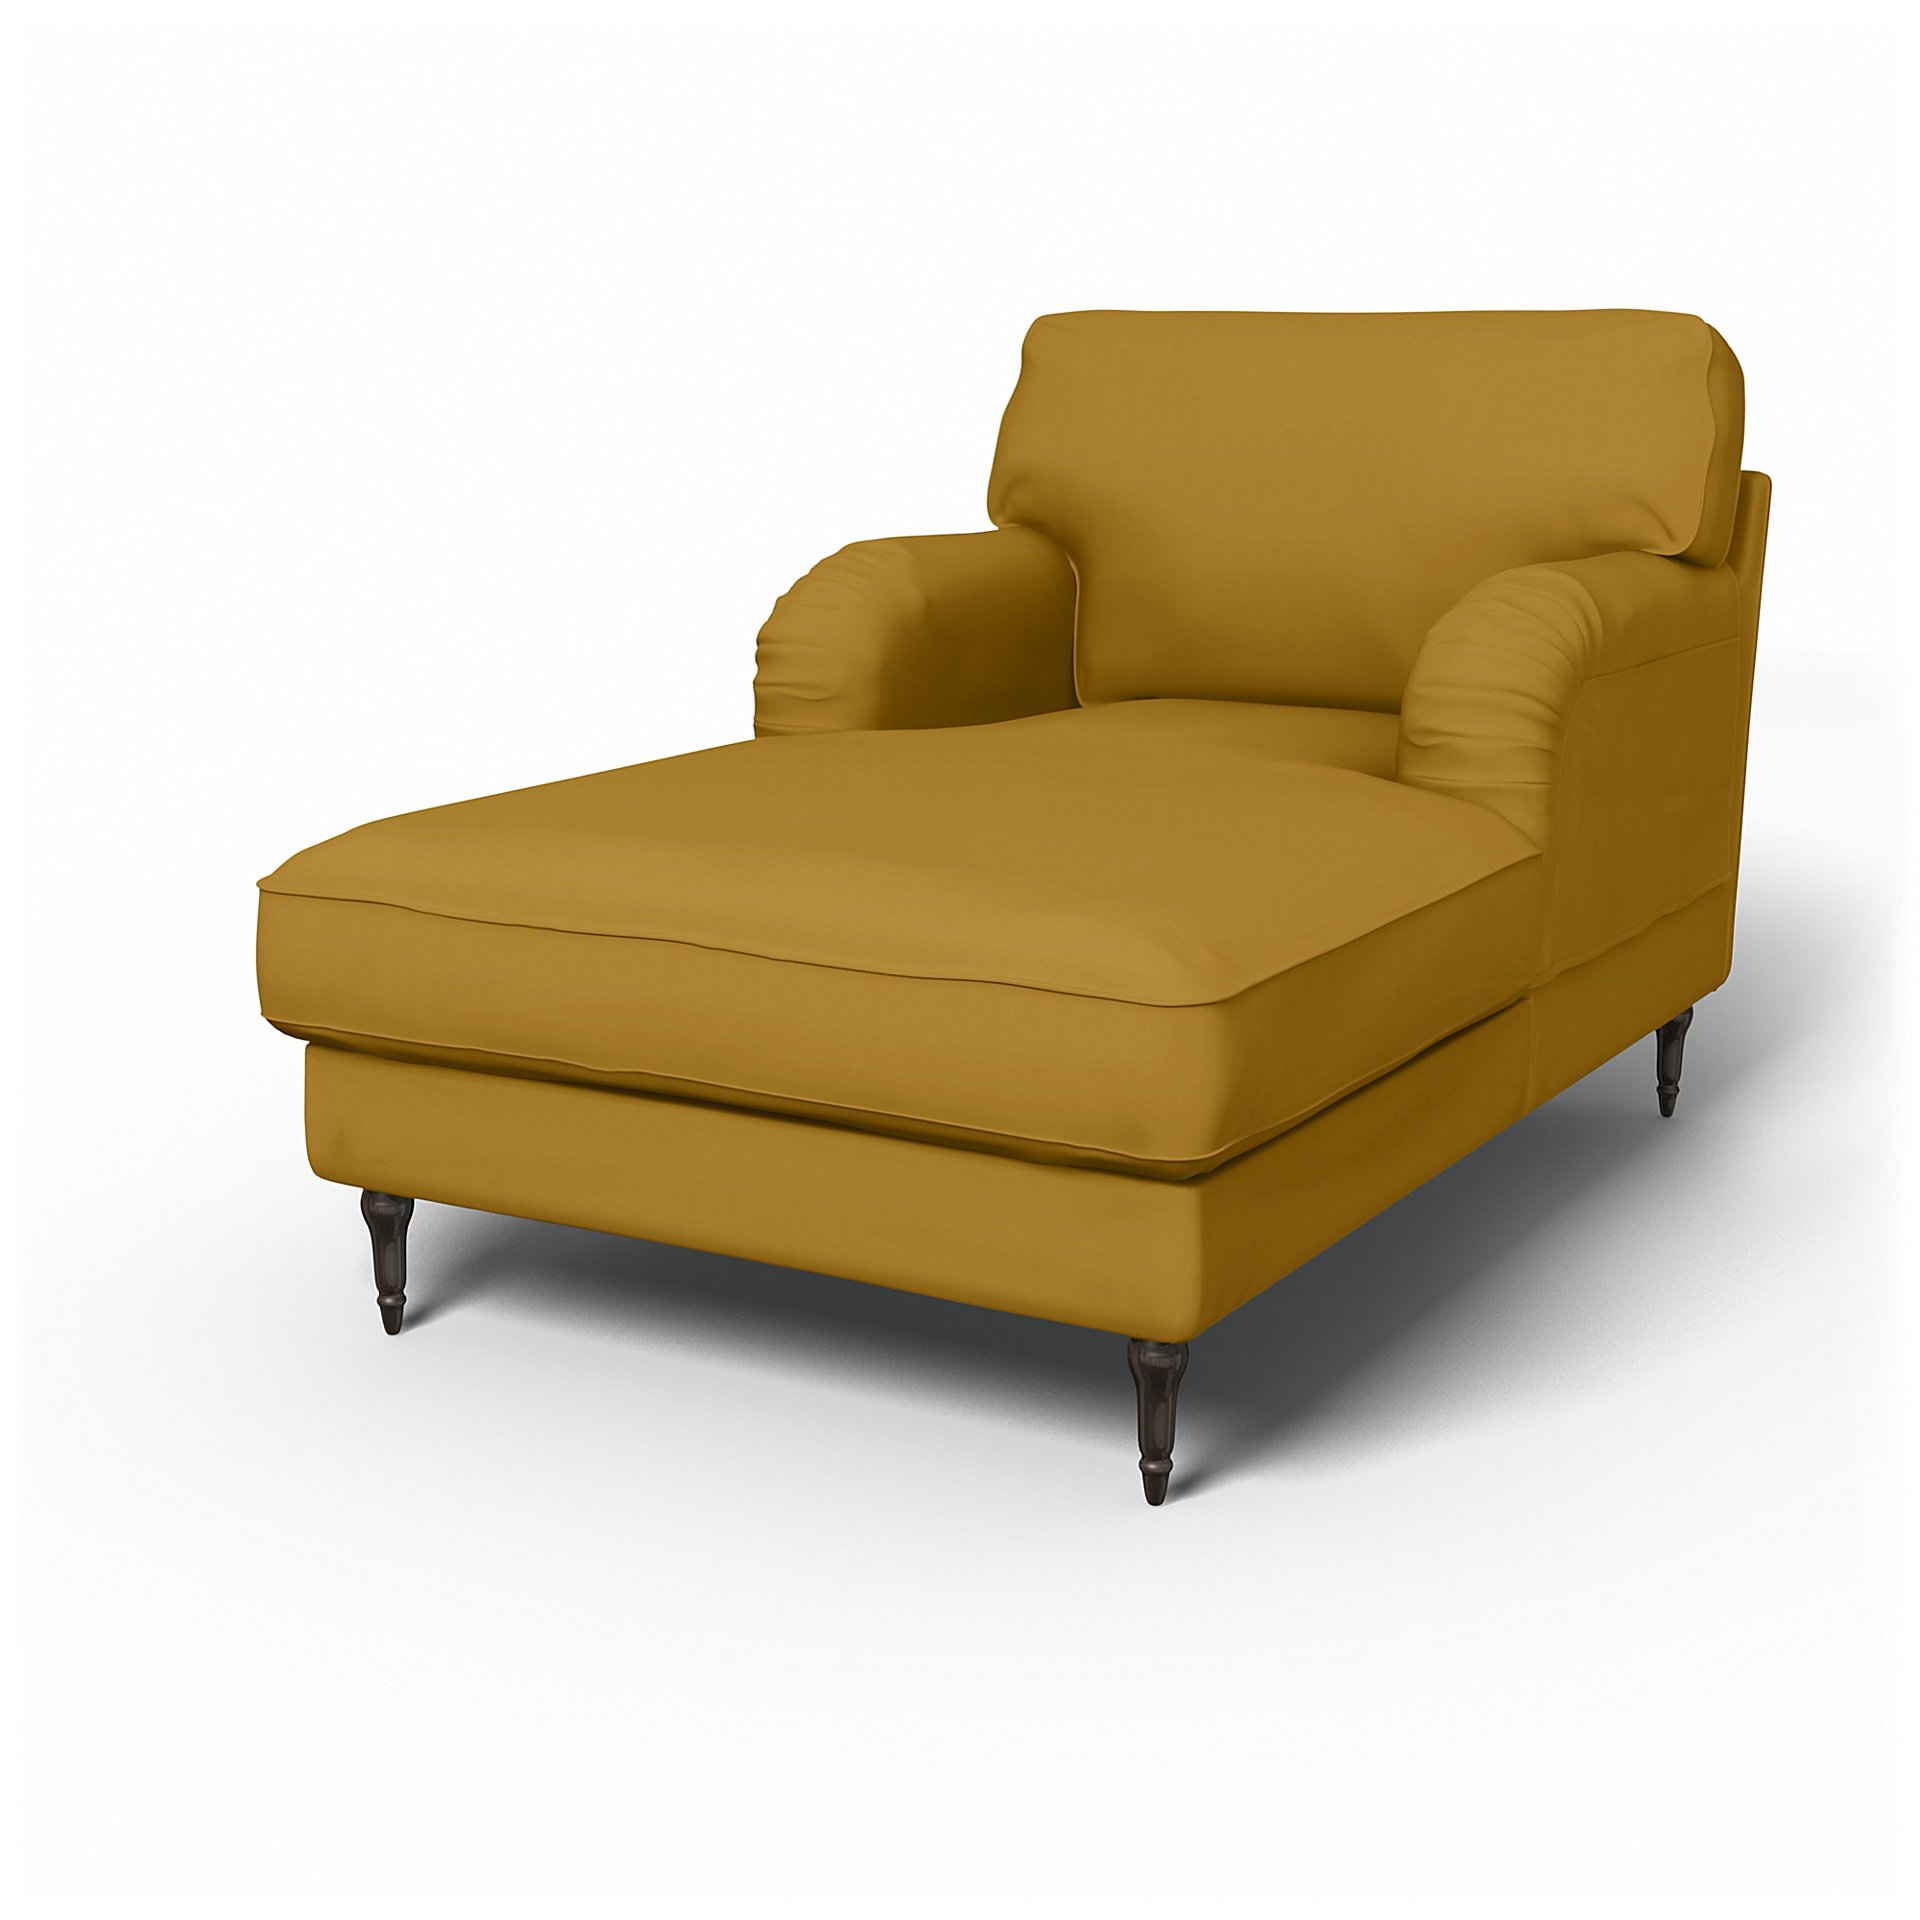 IKEA - Stocksund Chaise Longue Cover, Honey Mustard, Cotton - Bemz